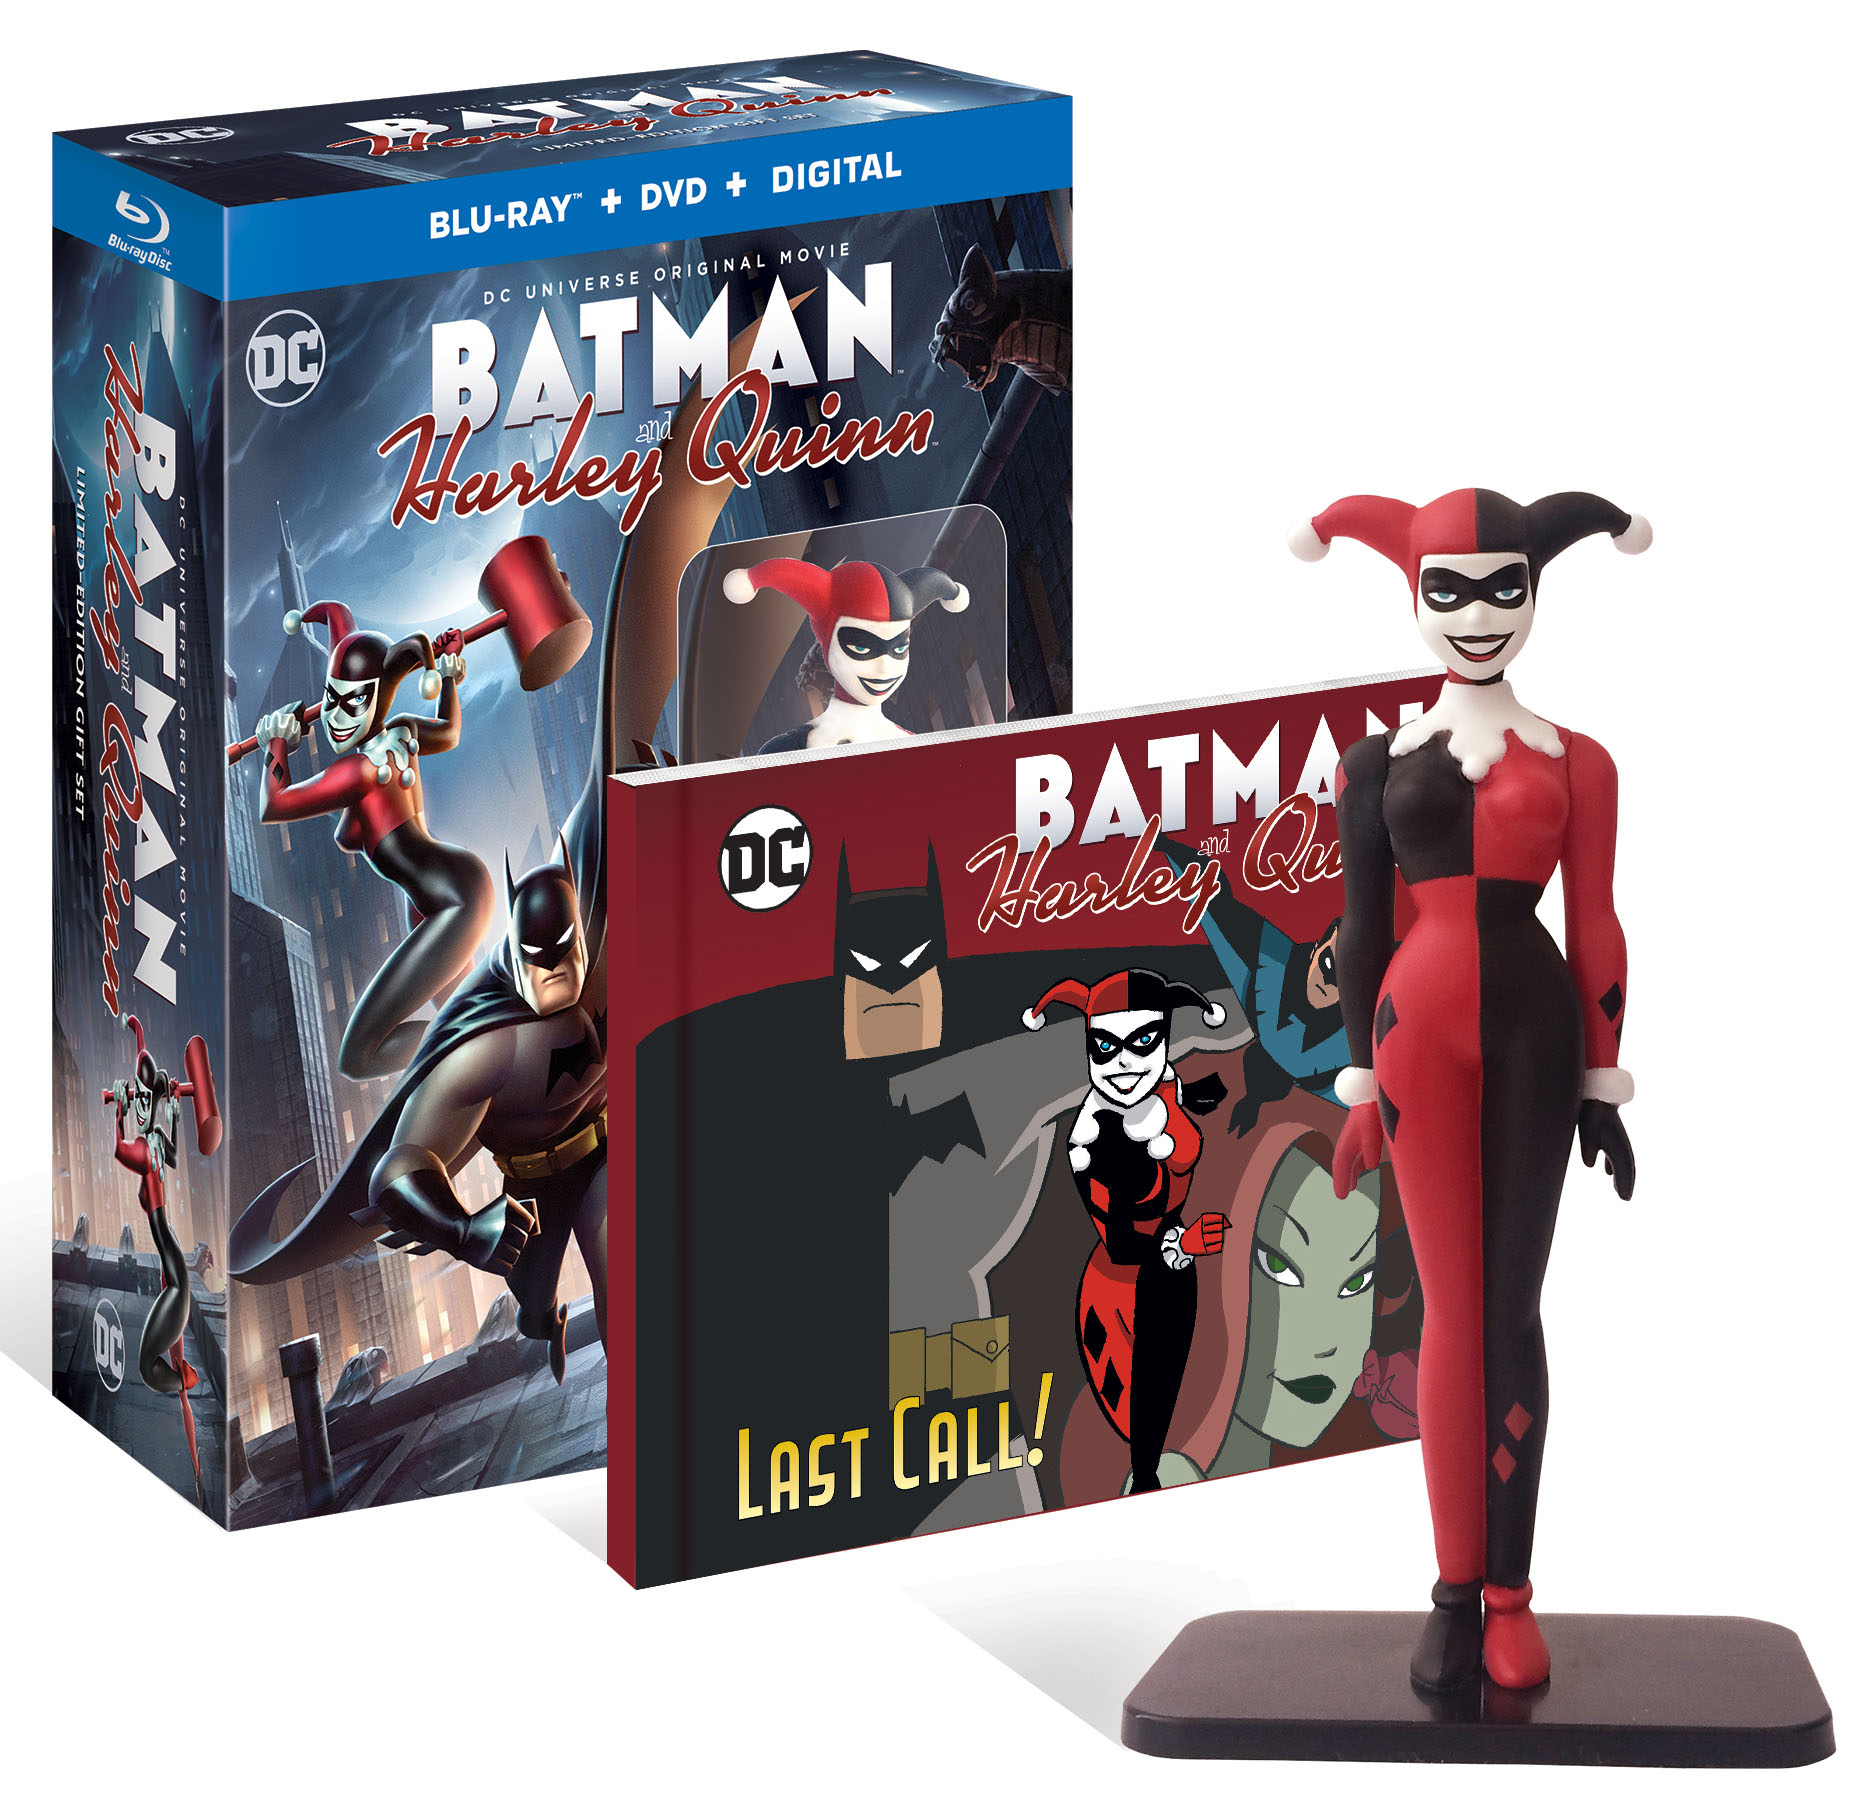 Batman and Harley Quinn [Includes Digital Copy] [Blu-ray/DVD] [Only @ Best  Buy] [2017] - Best Buy